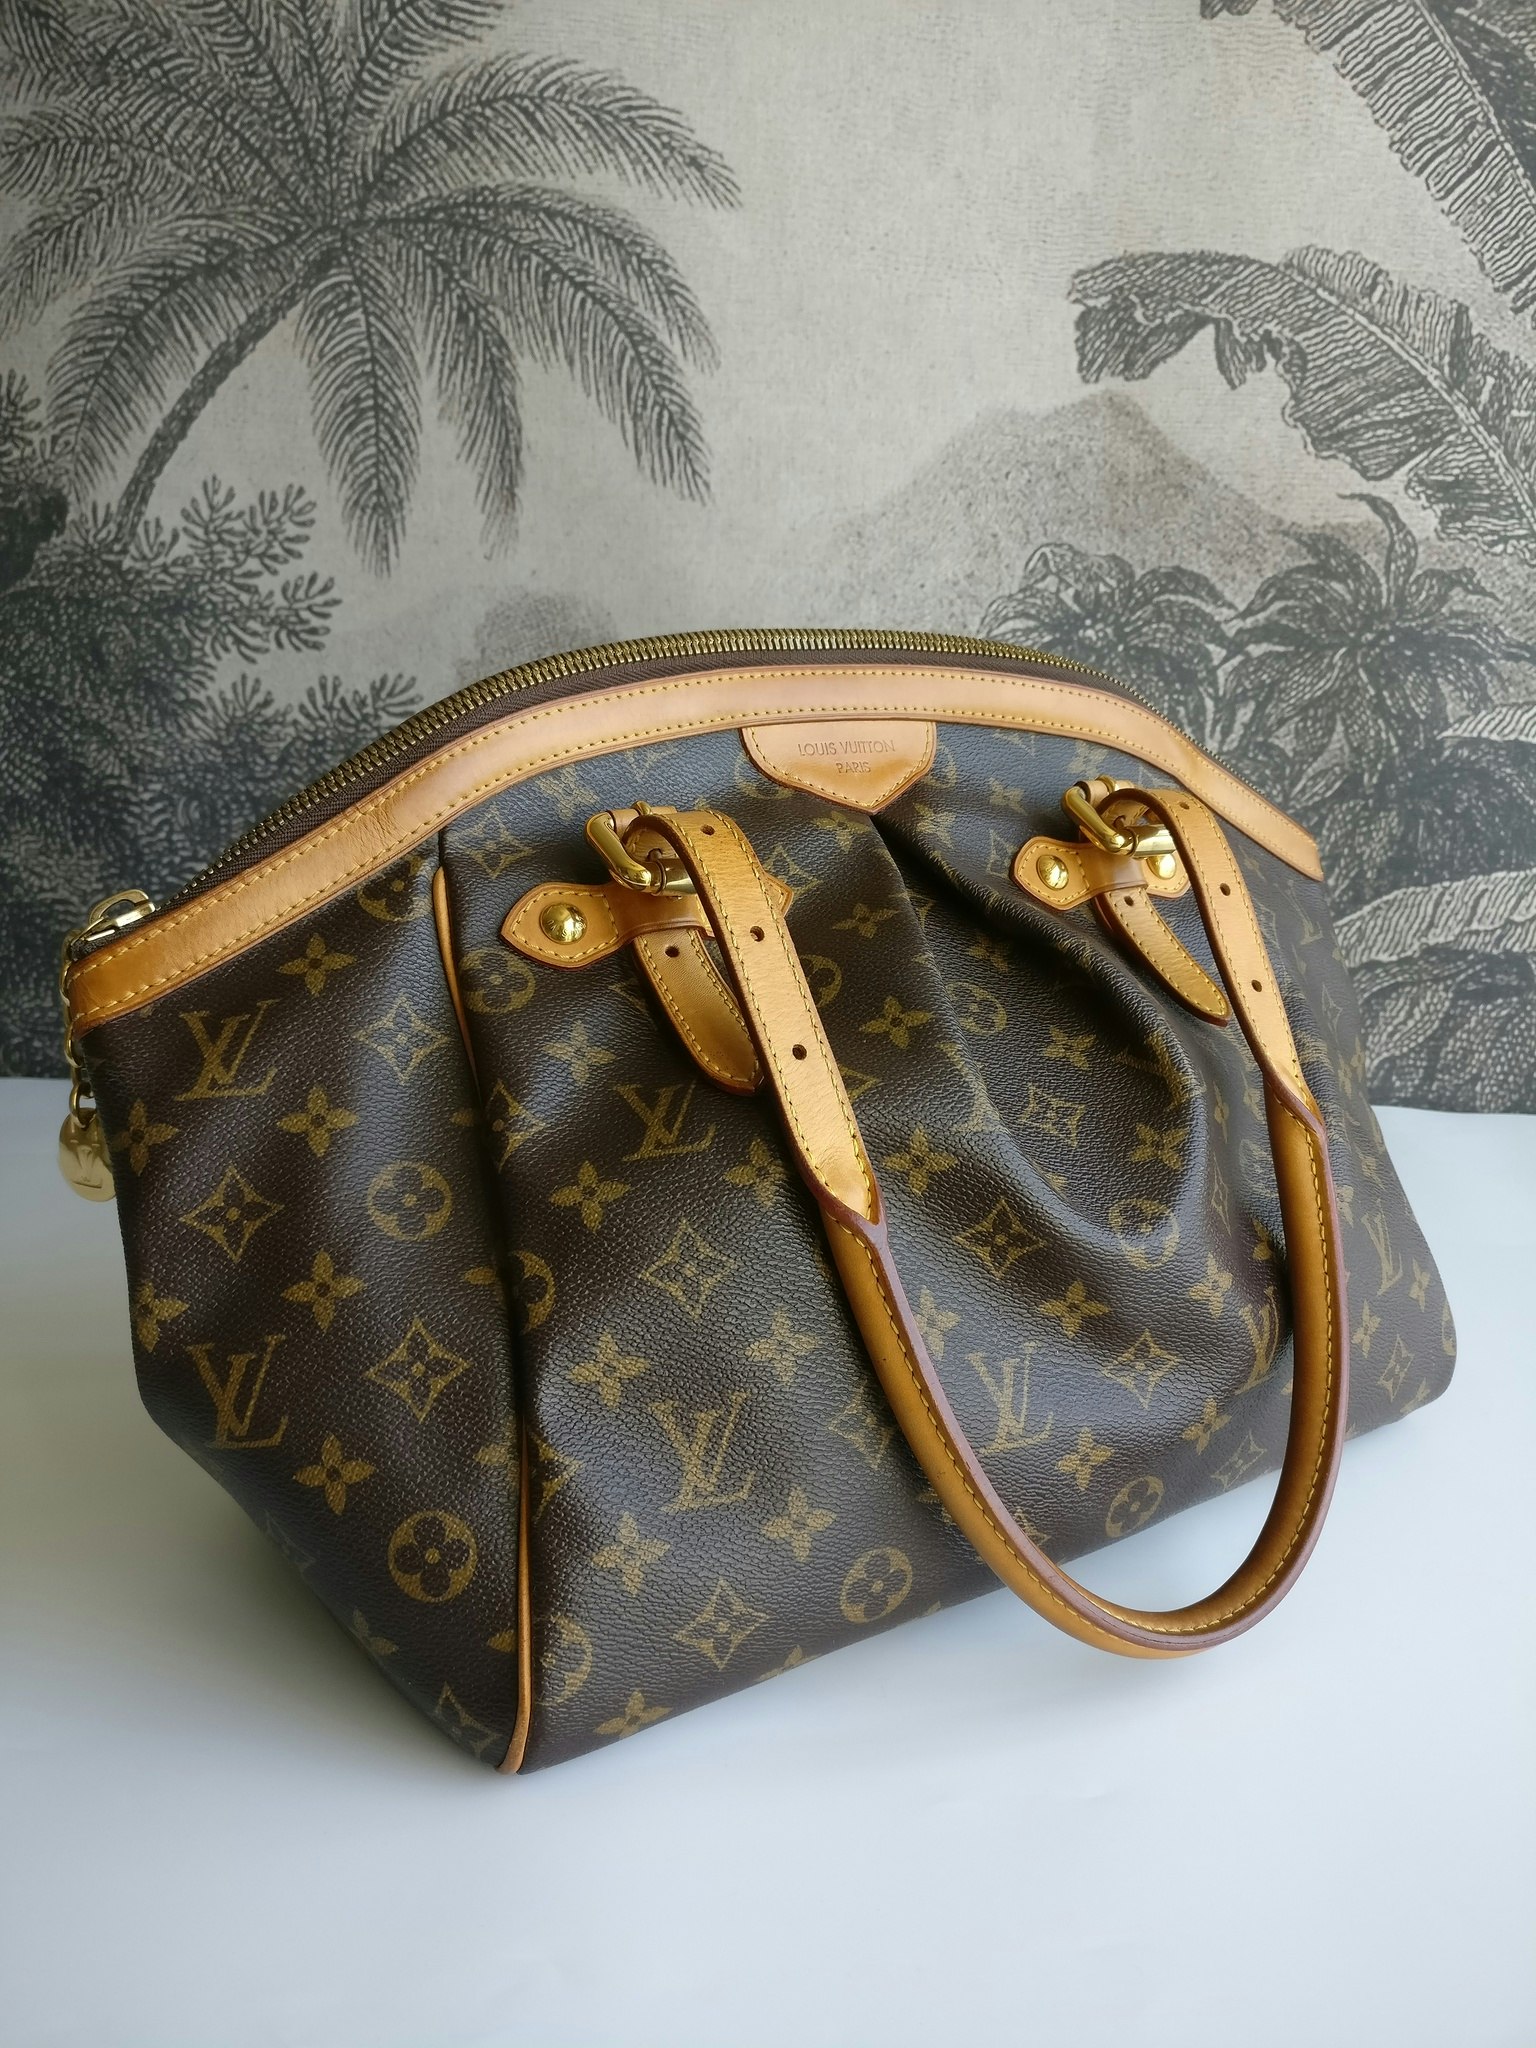 Louis Vuitton Tivoli GM - Good or Bag